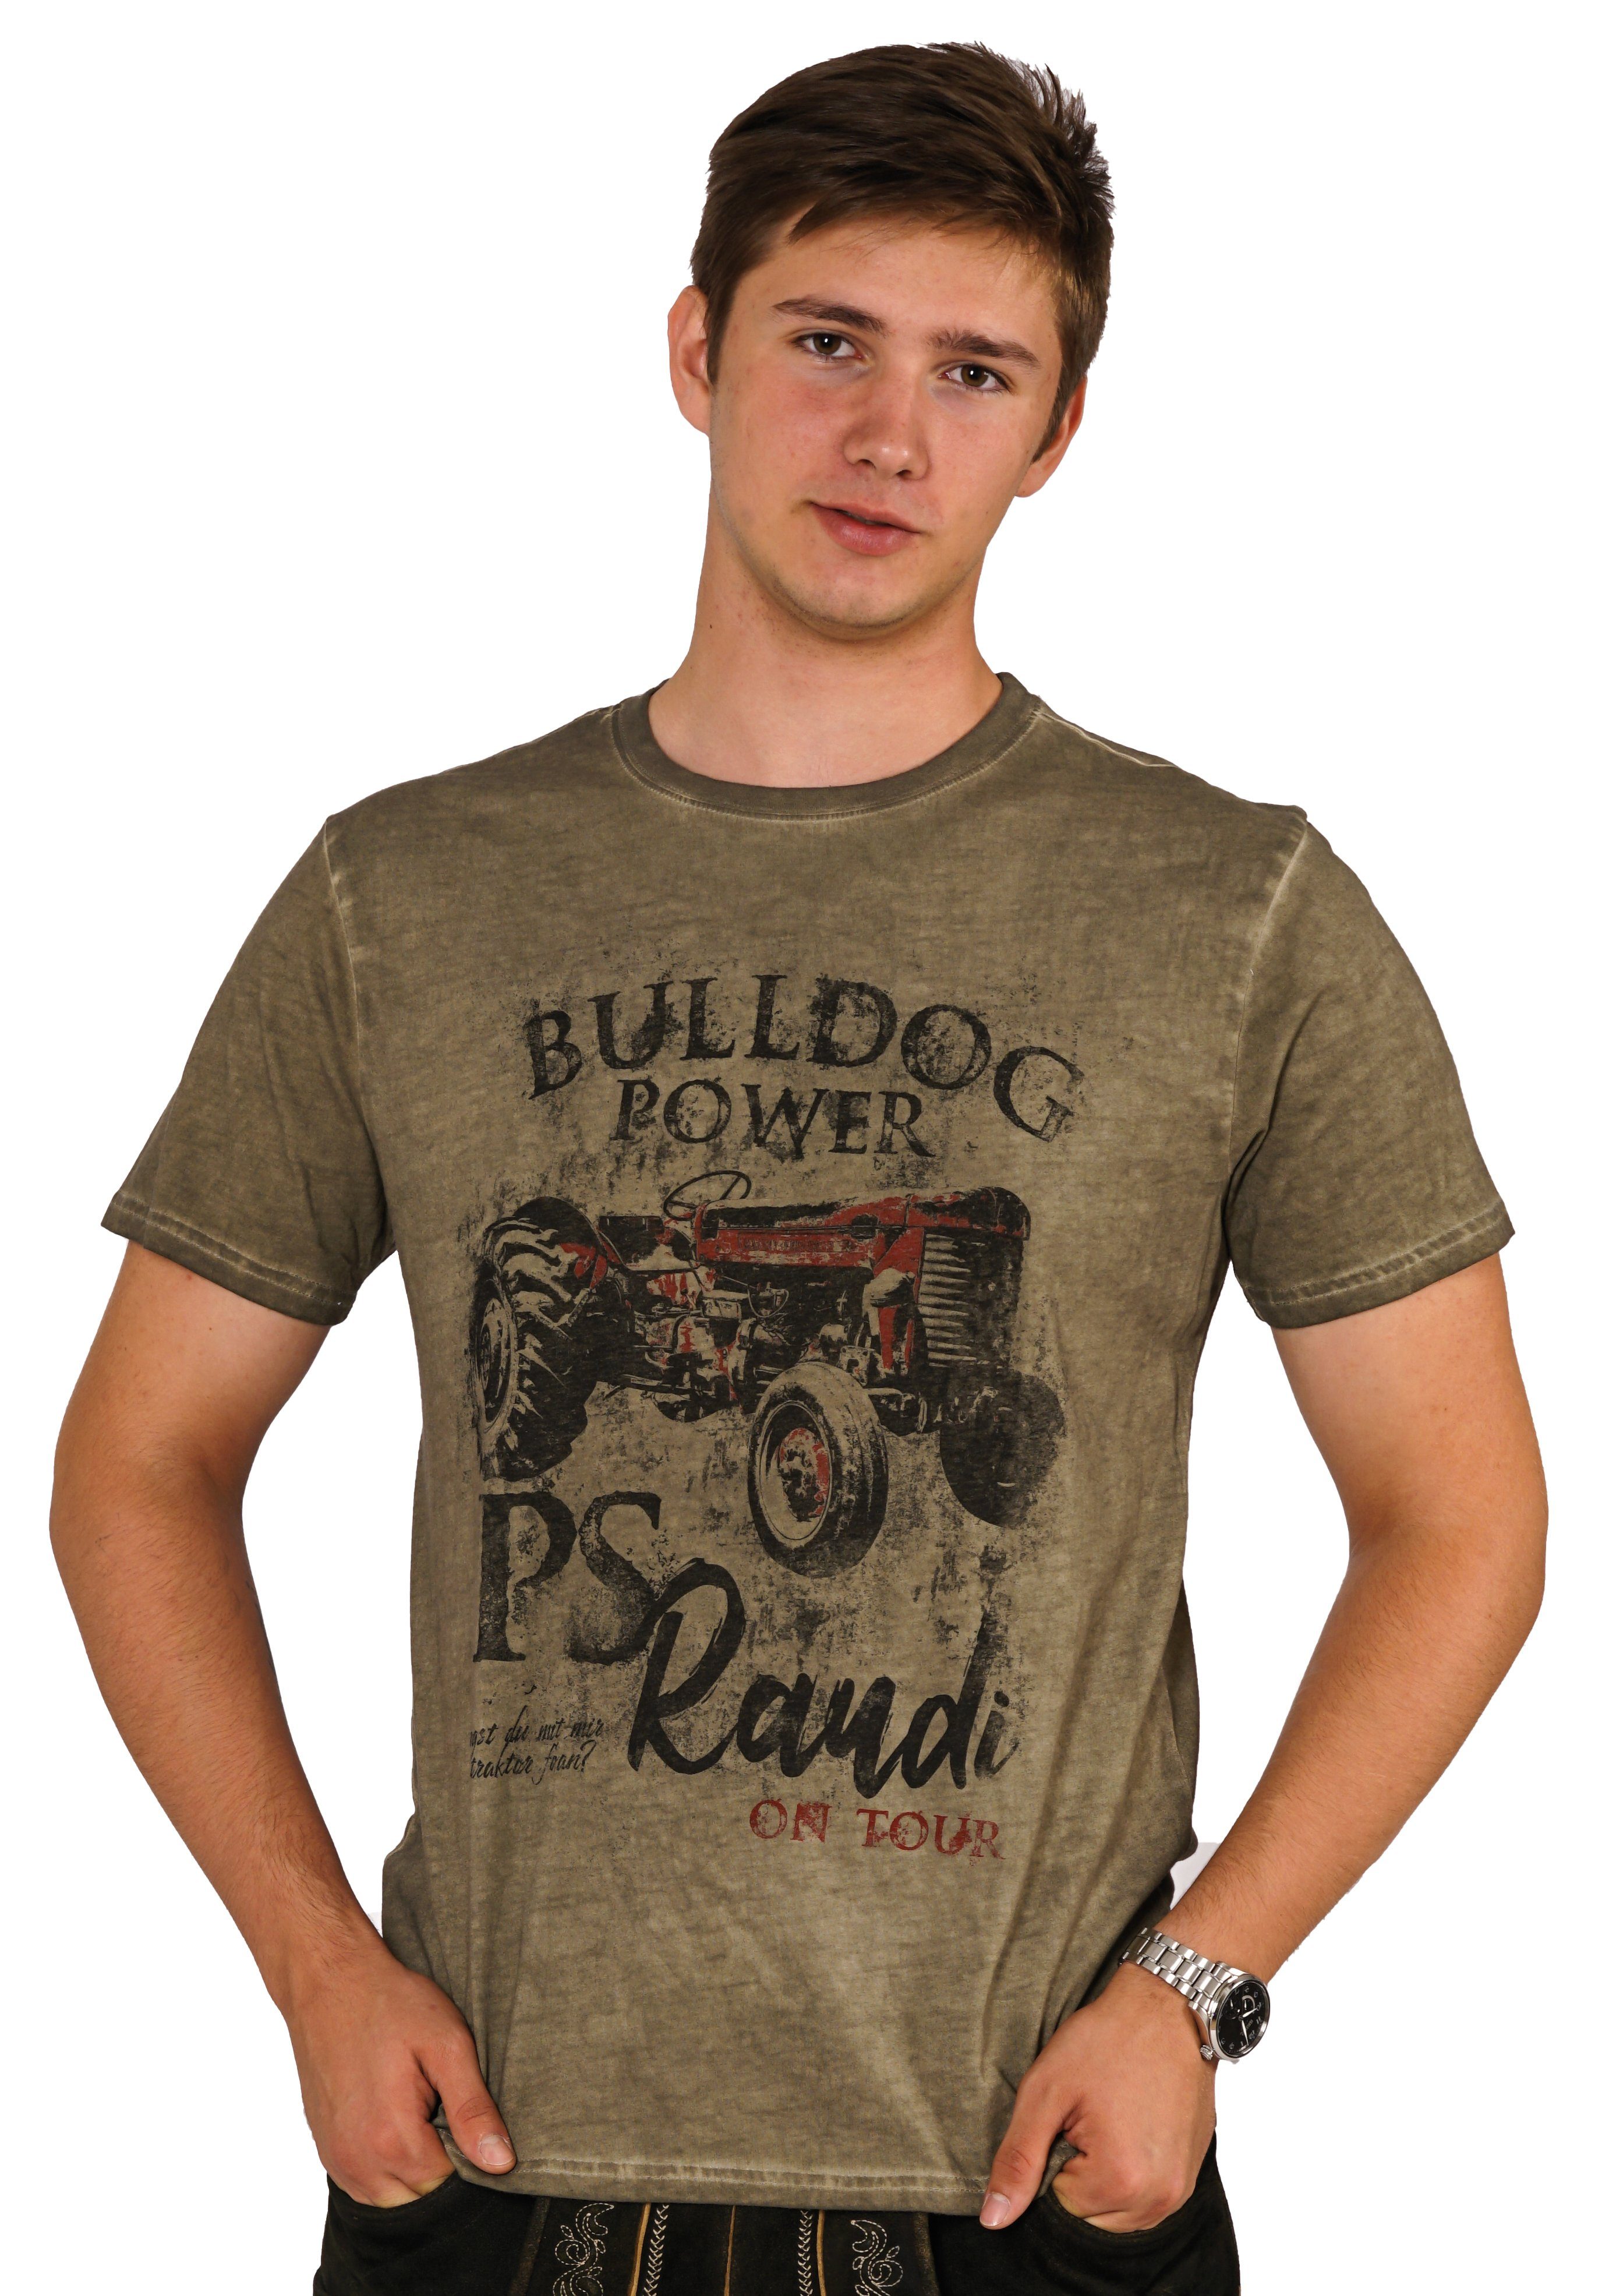 Power Raudi Tour Bulldog Khaki Soreso® on PS Trachtenshirt